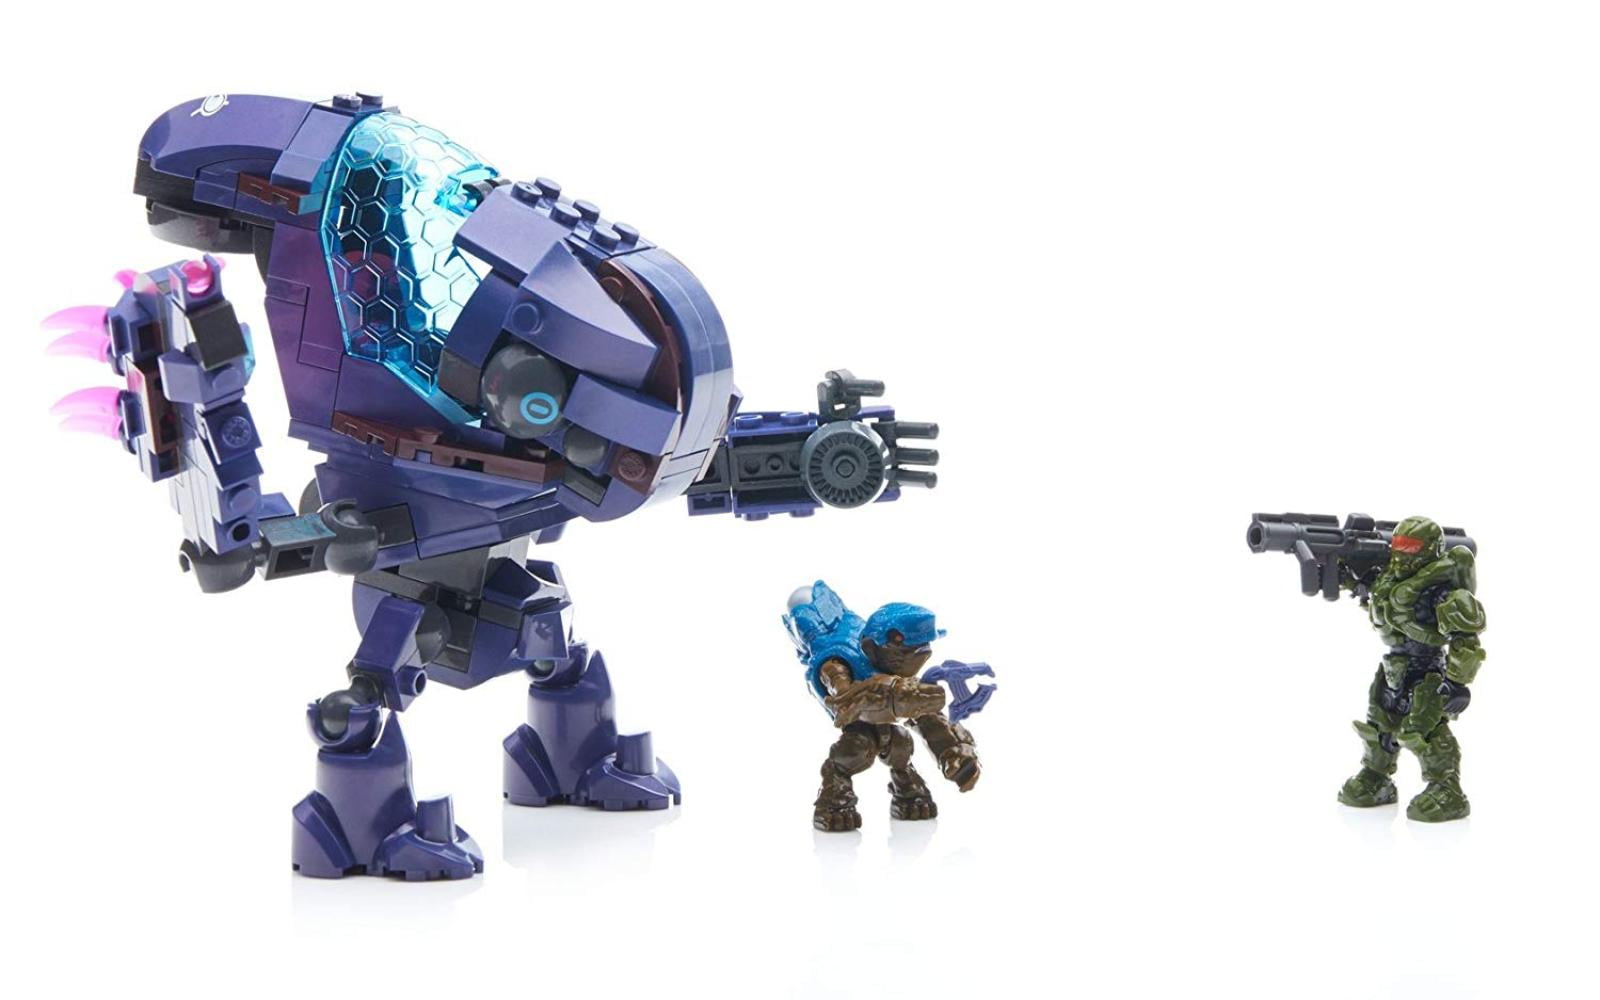 Lot of 5pcs New Mega Bloks Construx Halo Covenant Grunt Mini Figure Boy Toy Gift 